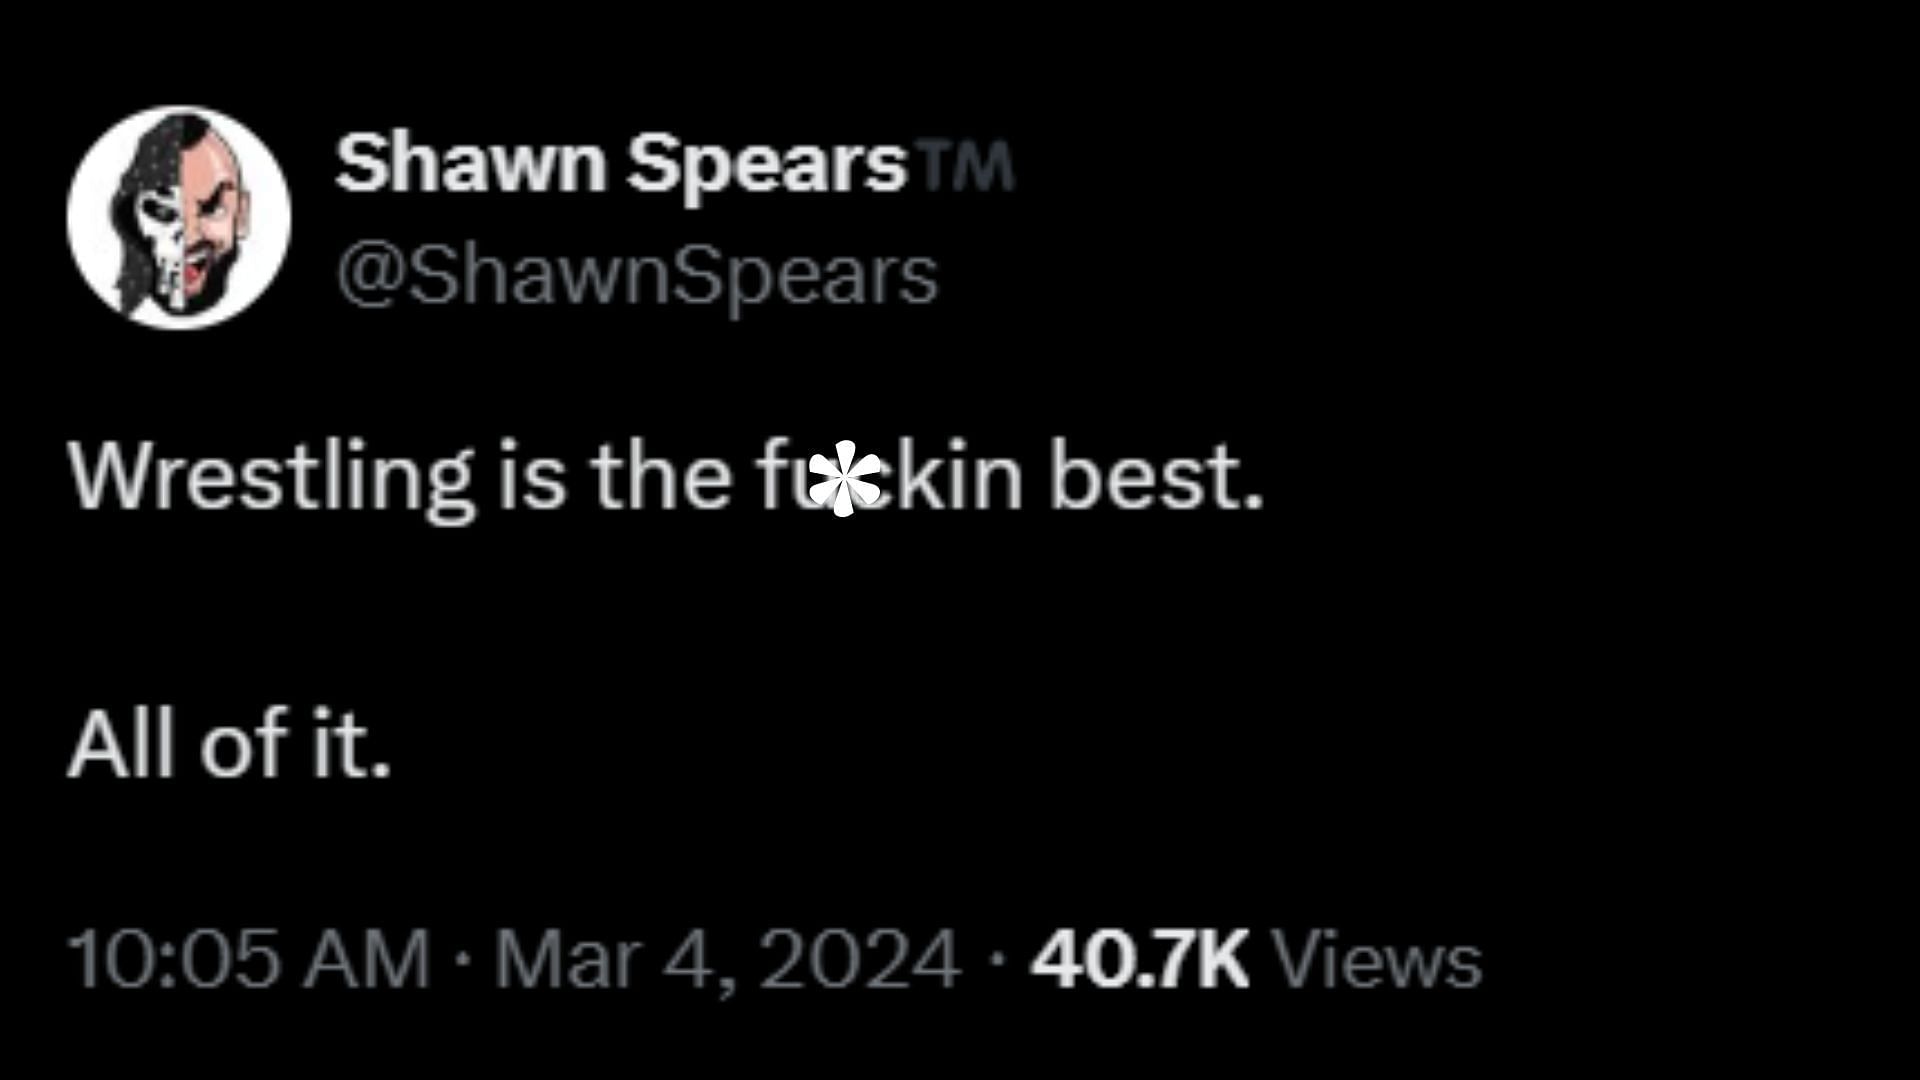 Screenshot of Shawn Spears tweet